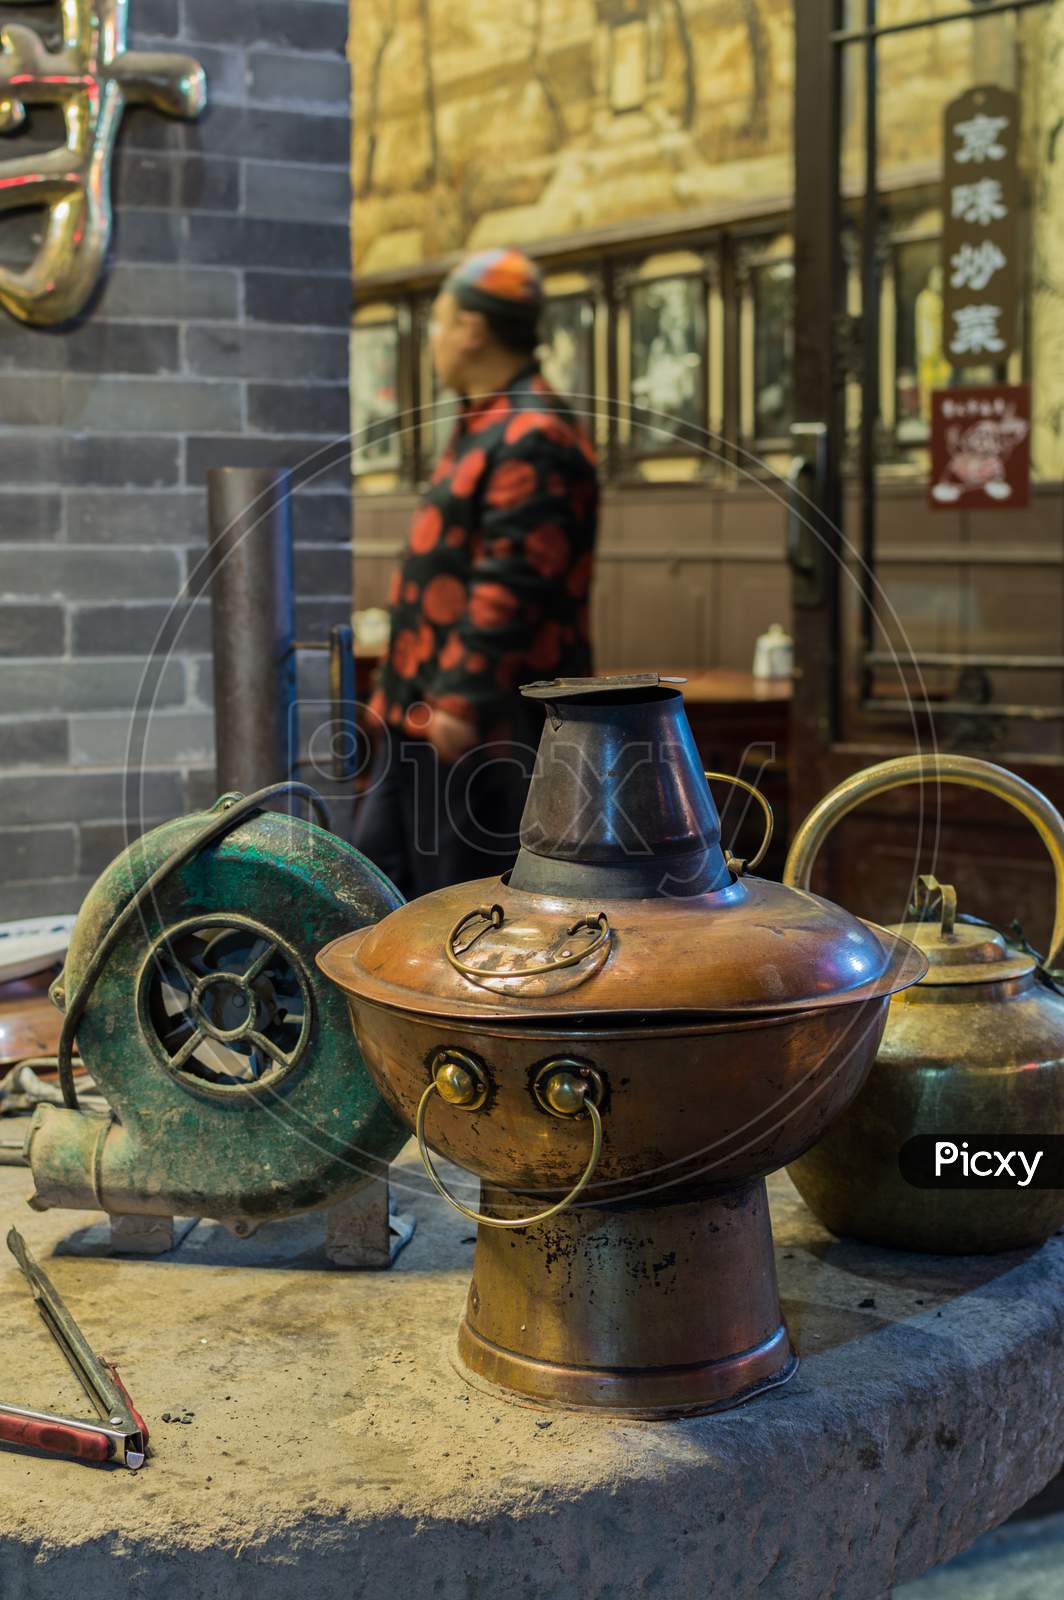 Hot Pot In Front Of The Restaurant In Old Qianmen Street In Beijing, China